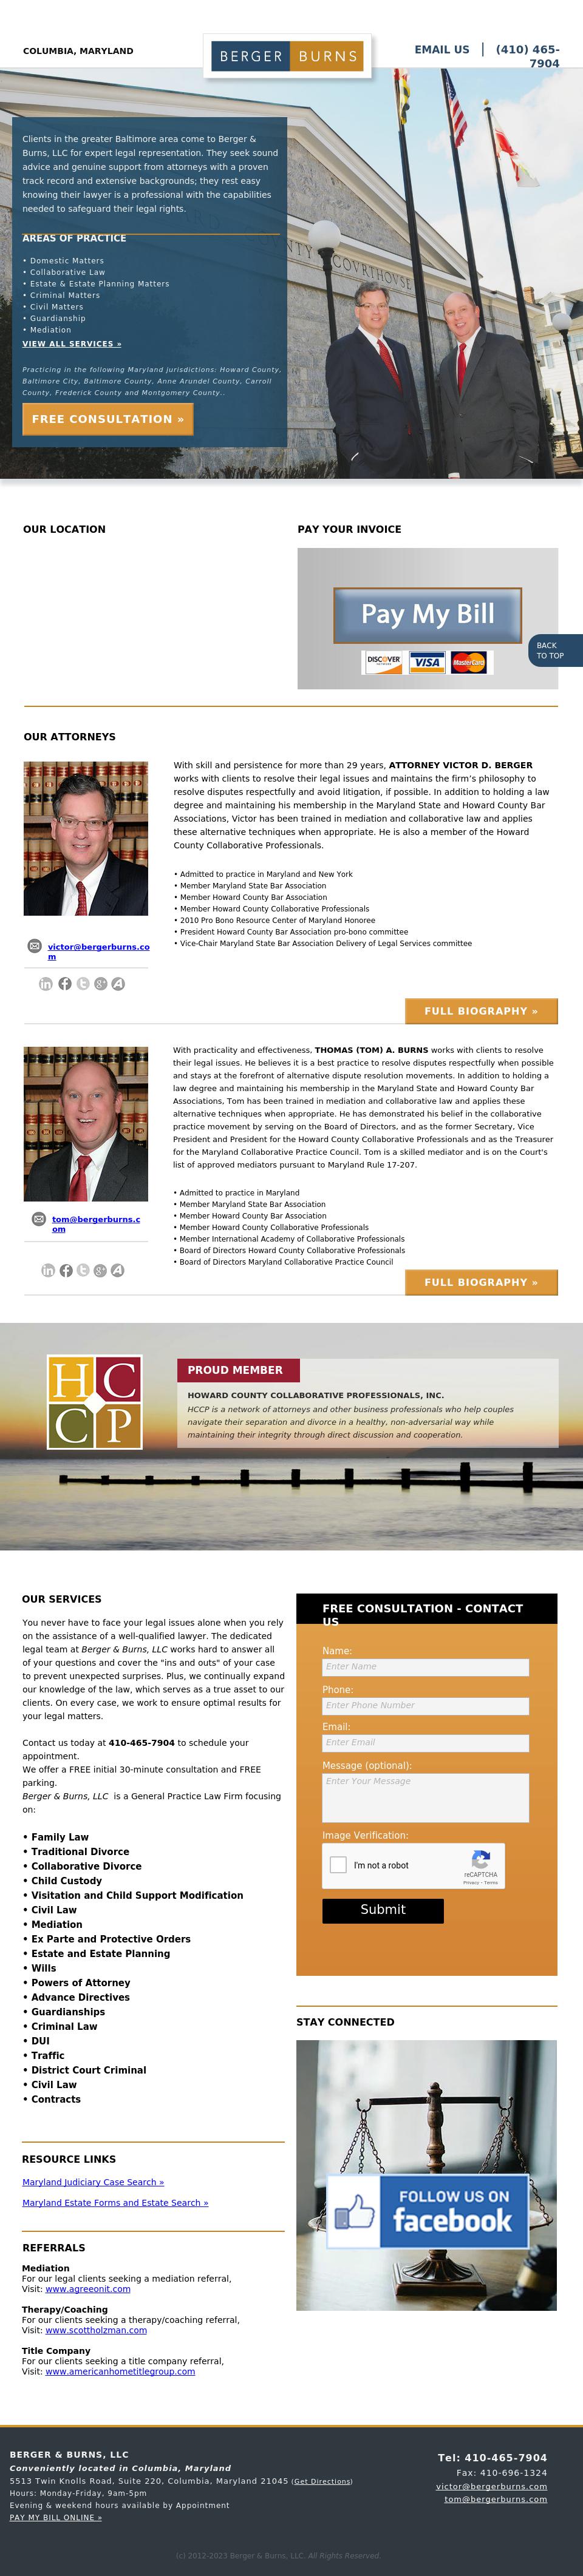 Berger & Burns, LLC - Ellicott City MD Lawyers